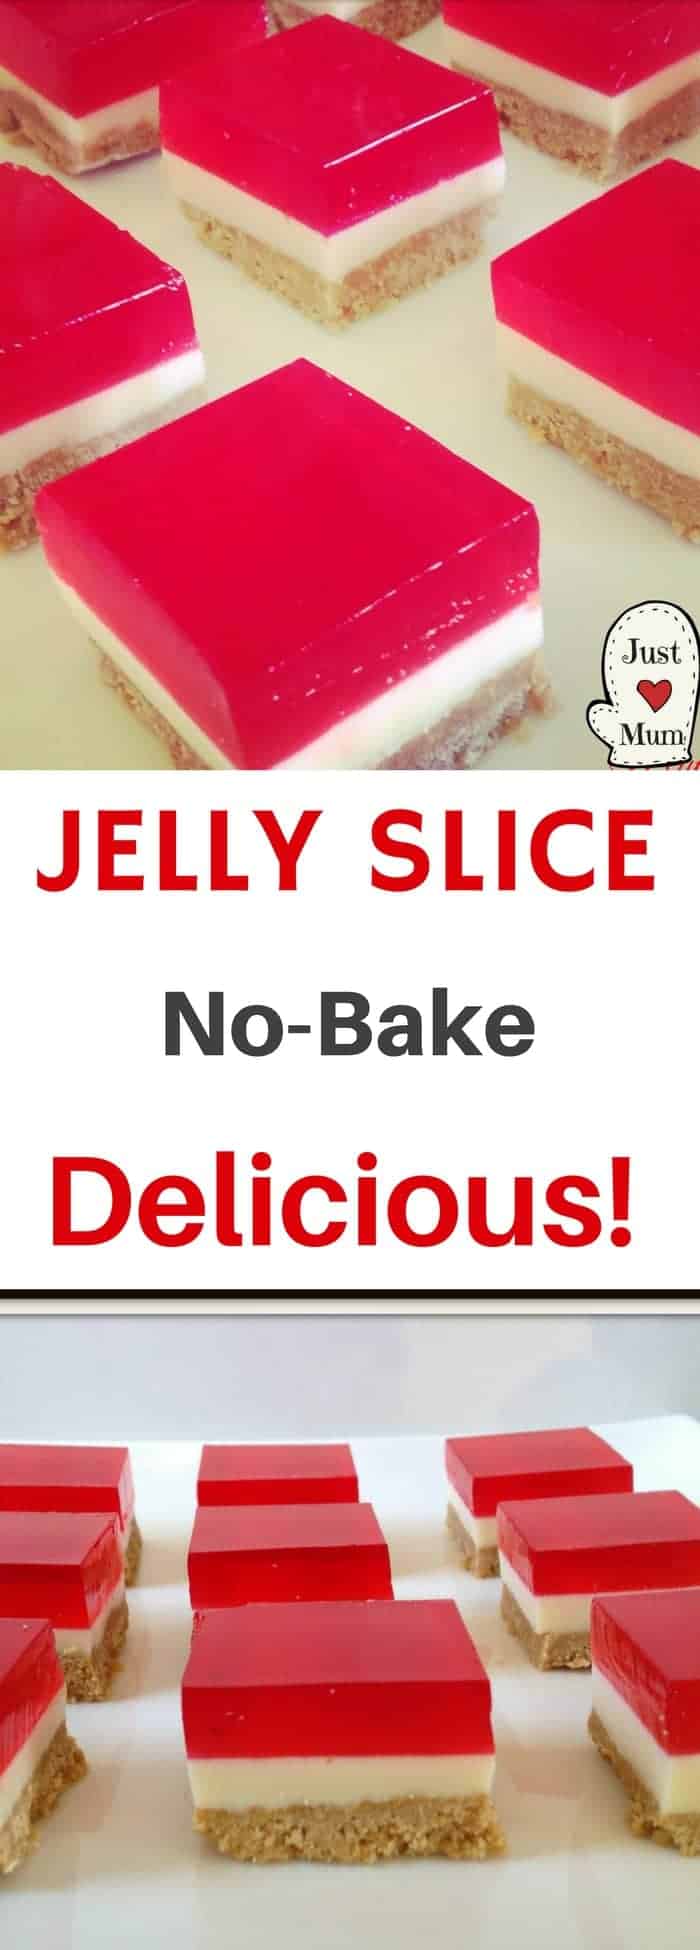 Just A Mums Jelly Slice - No Bake